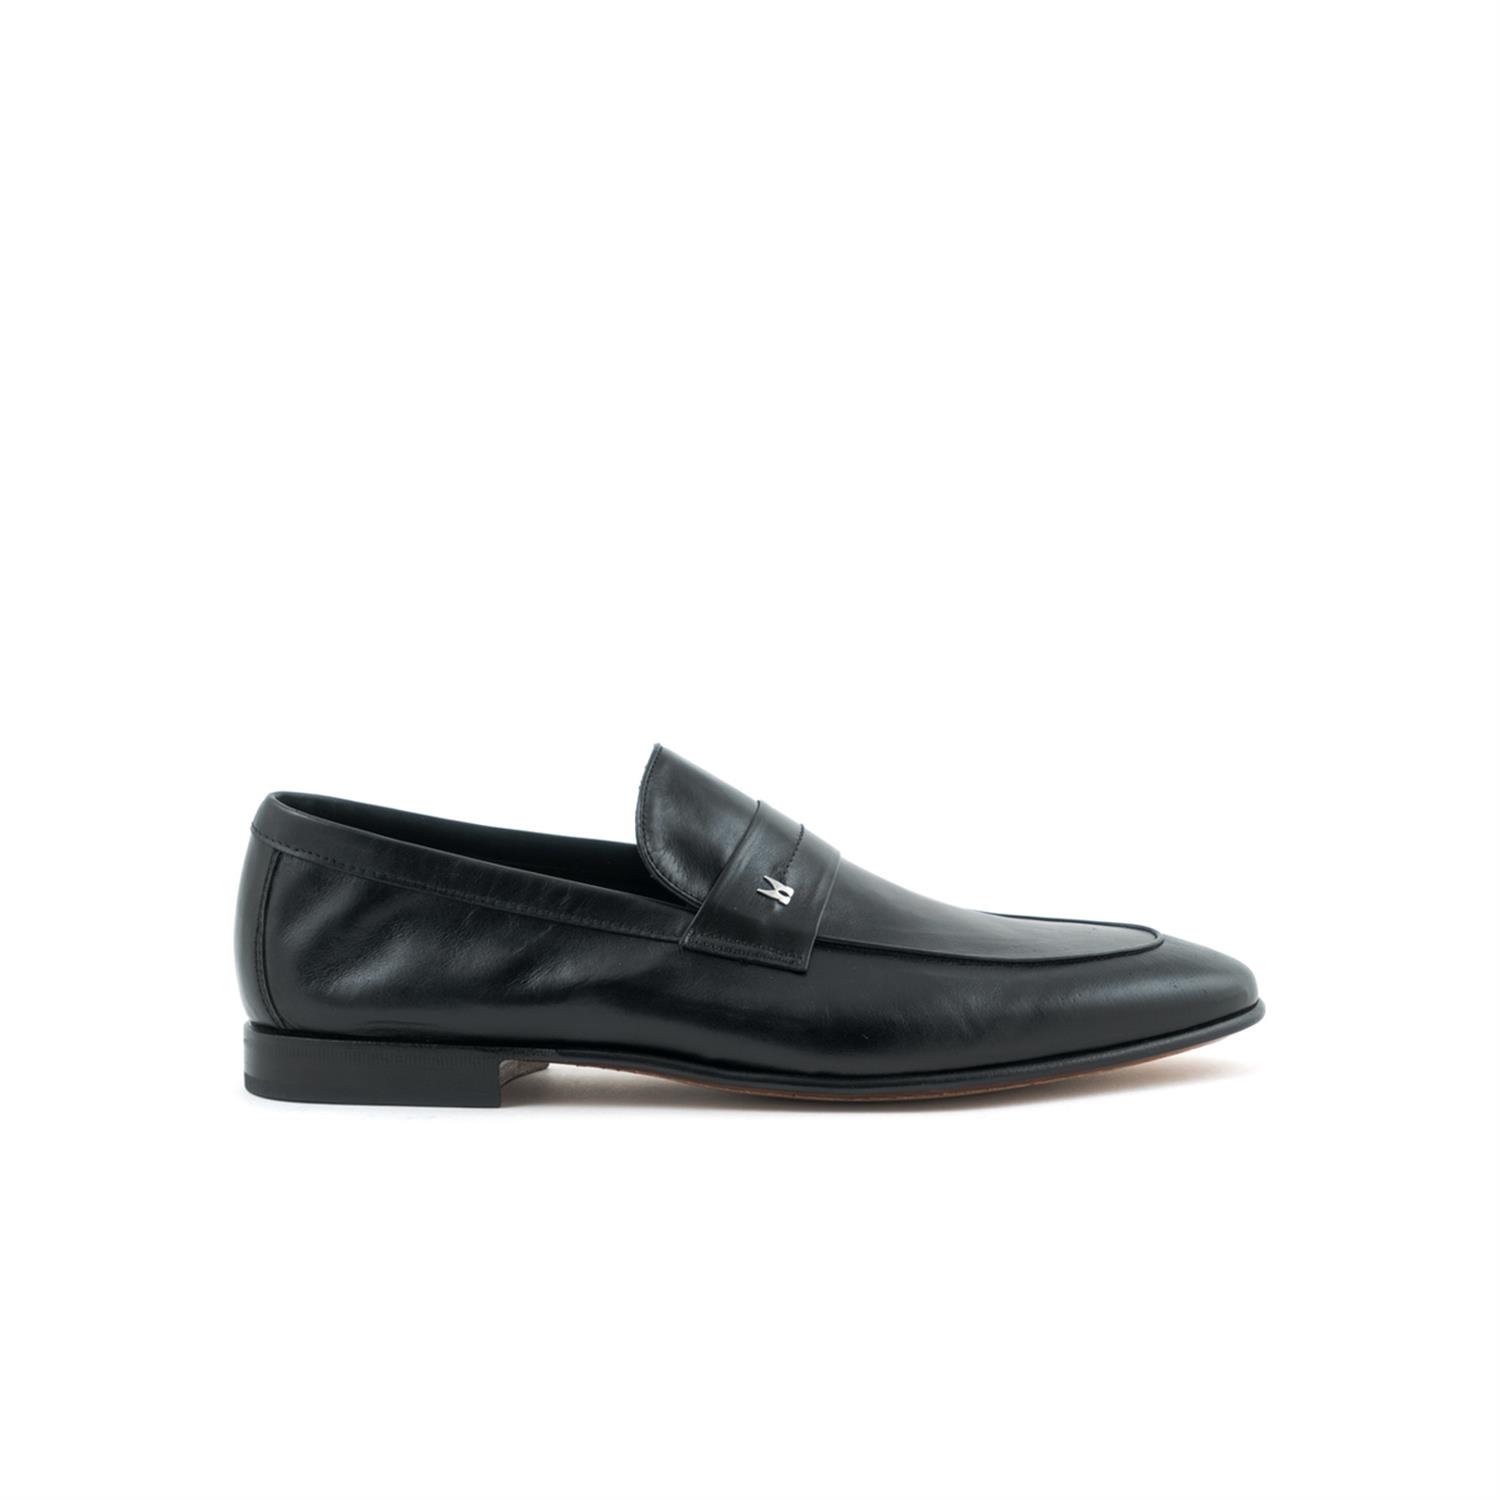 Moreschi Leather Men's Classic Shoes